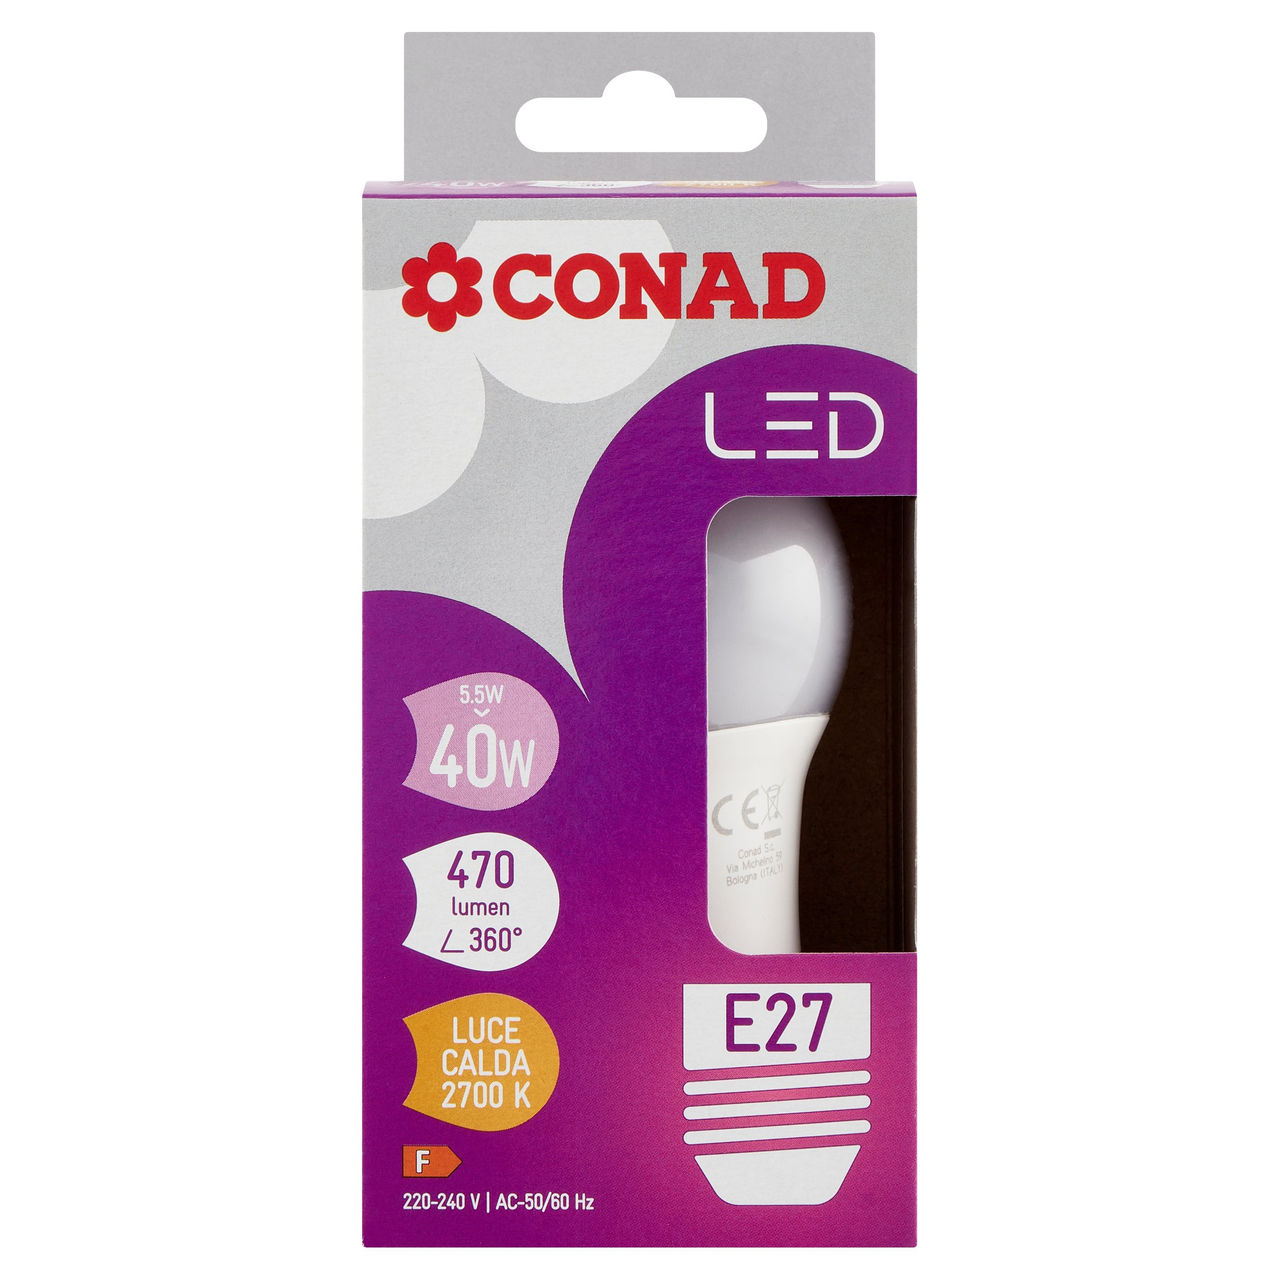 CONAD Led 5.5W 470 lumen E27 Luce Calda